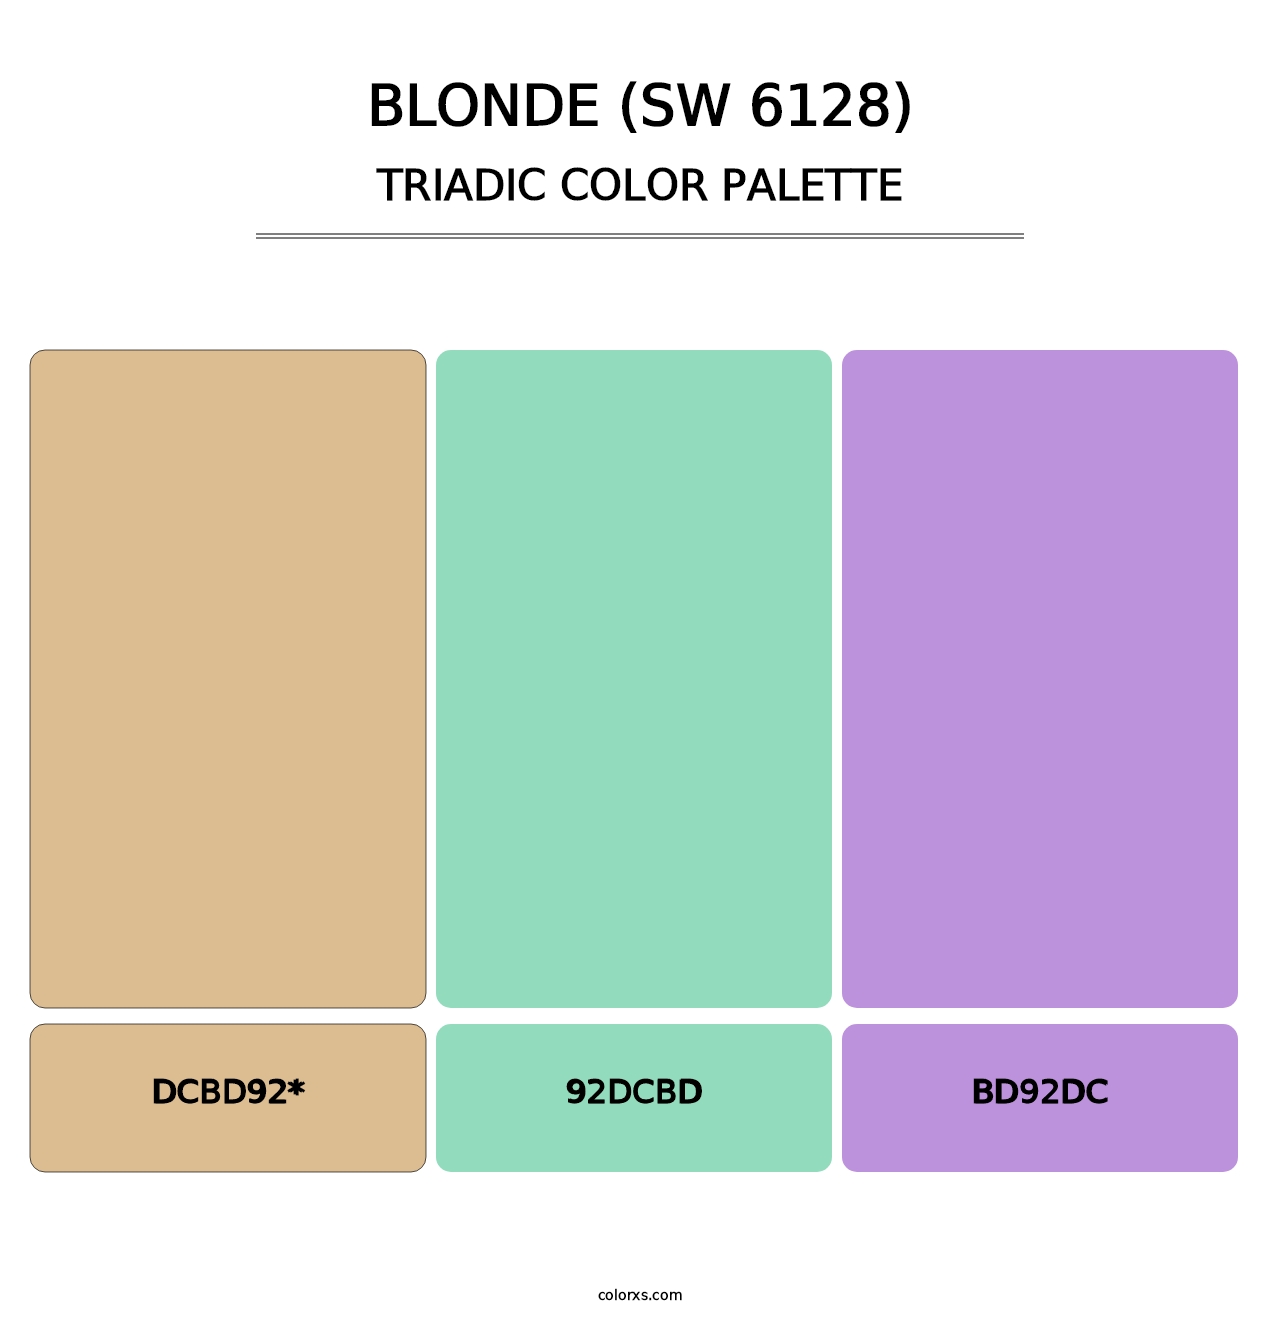 Blonde (SW 6128) - Triadic Color Palette